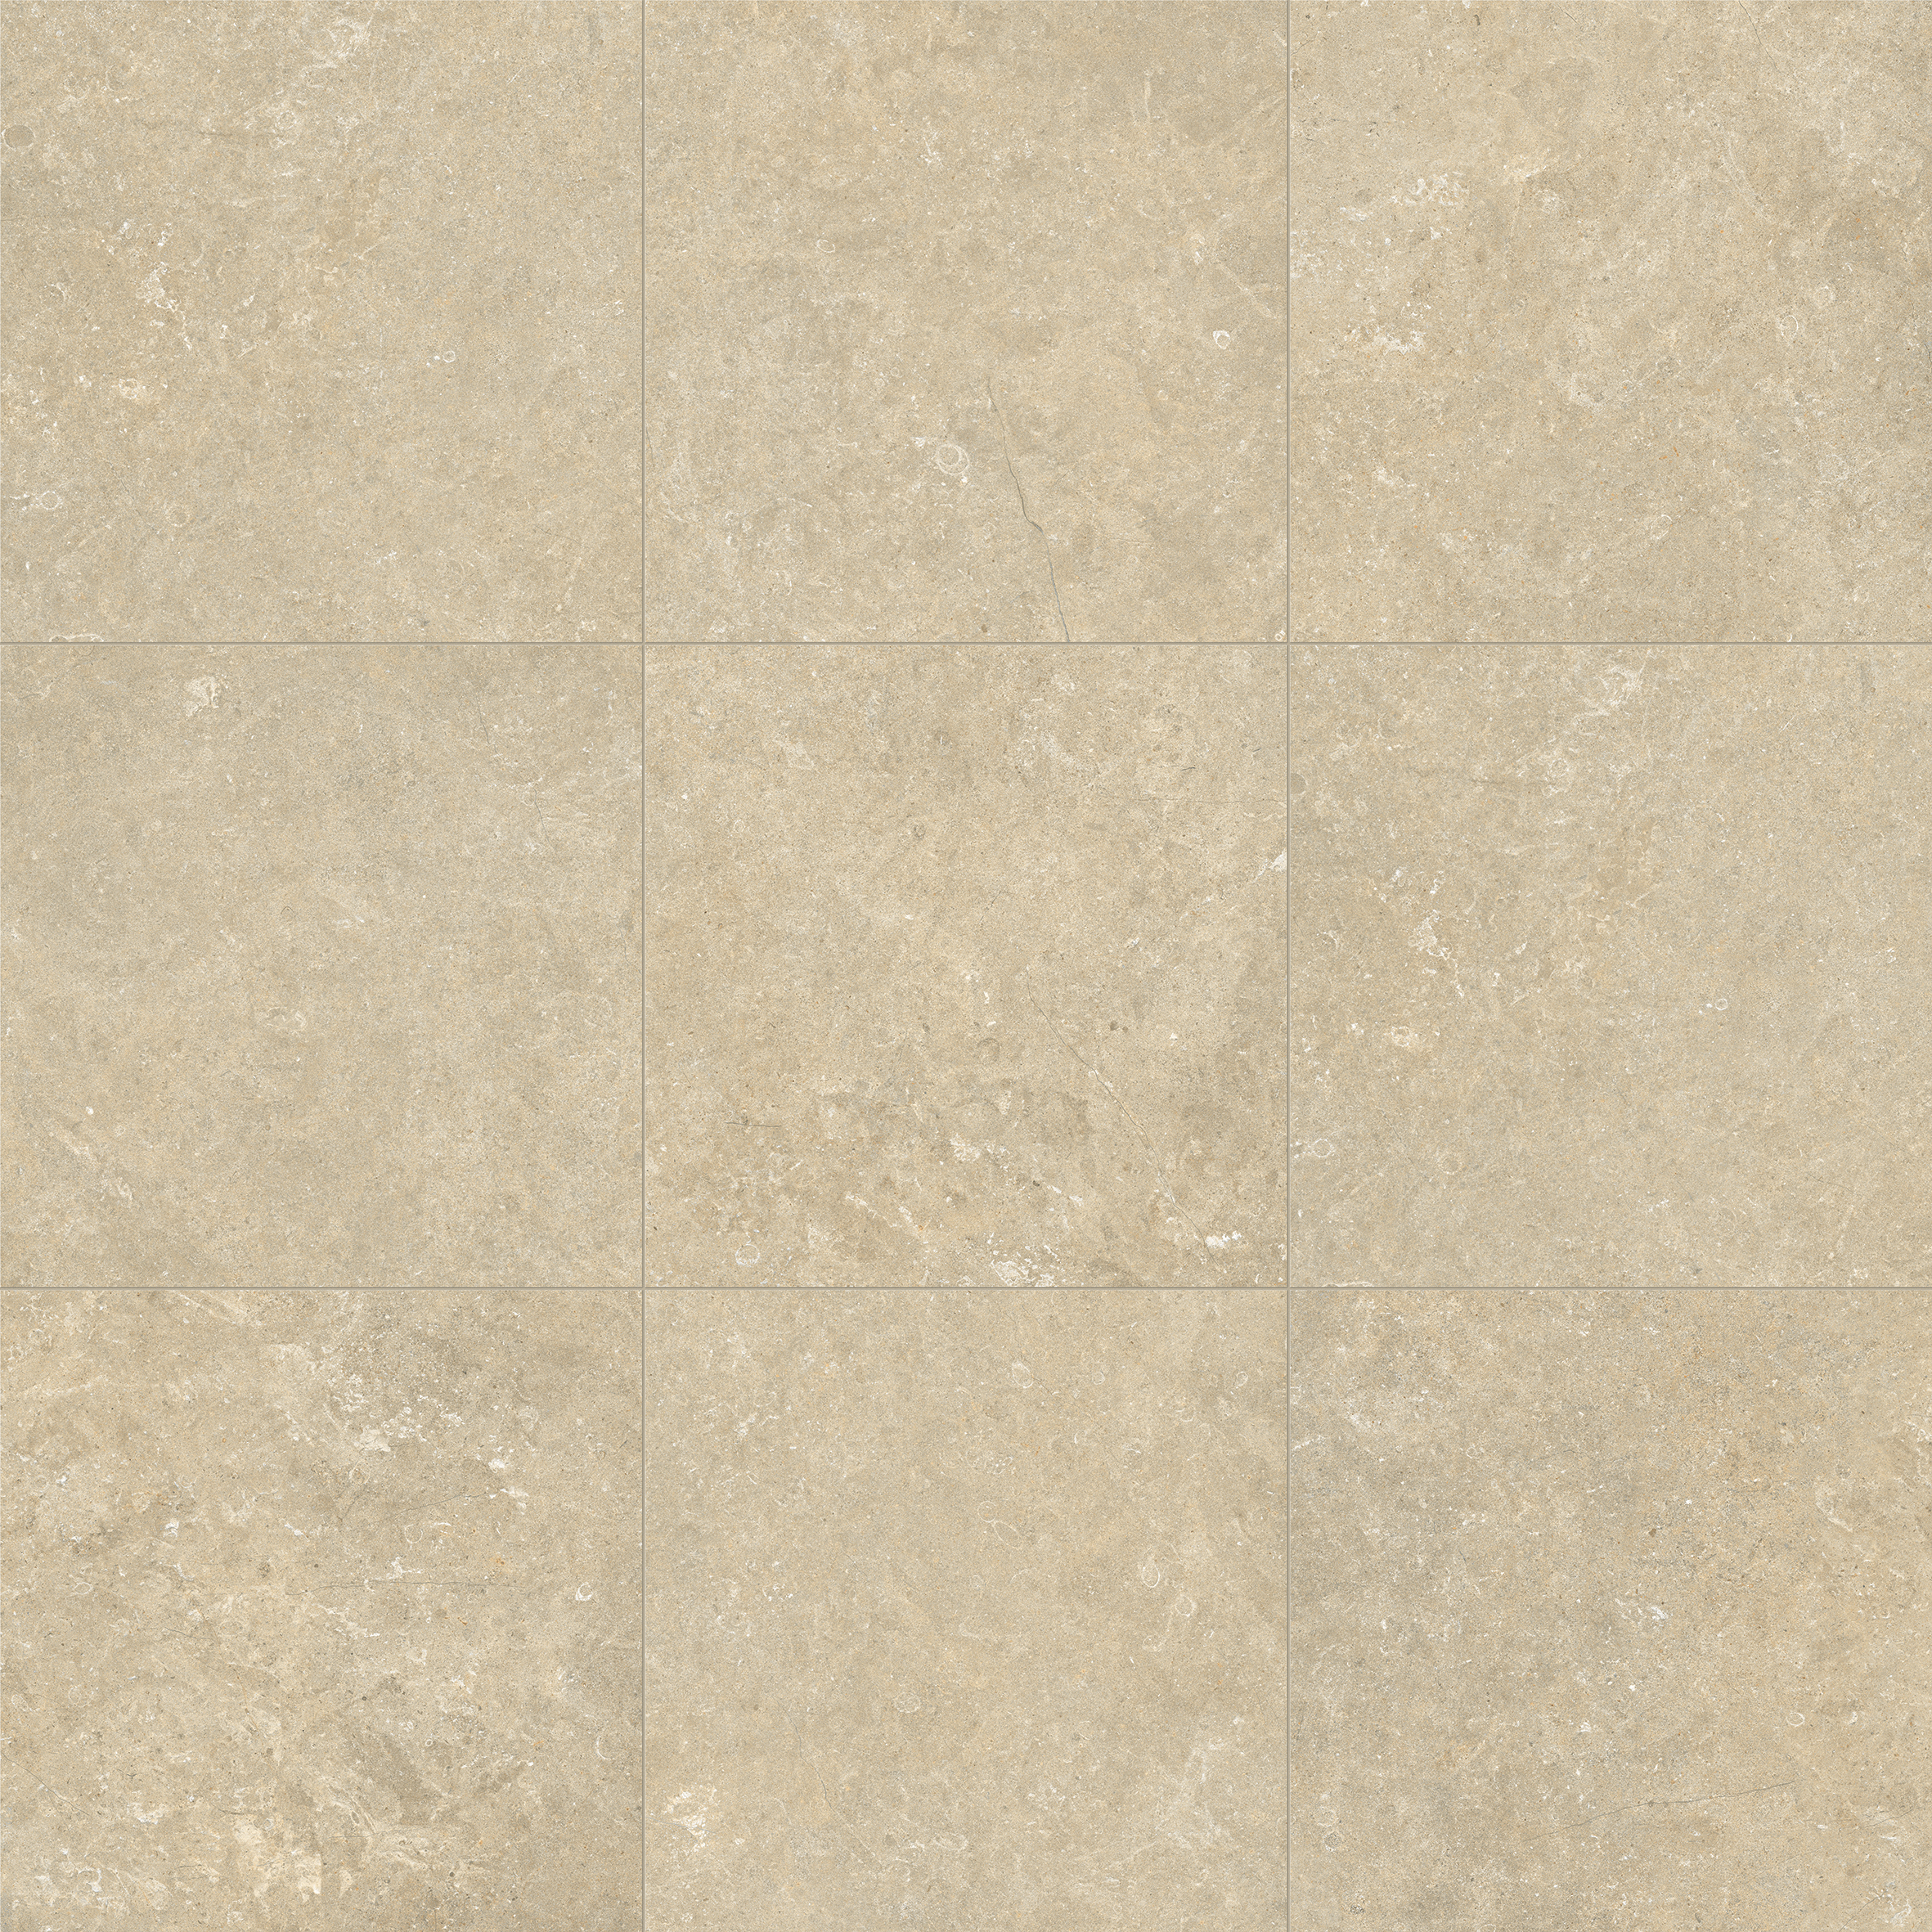 Marca Corona Arkistyle Sand Naturale – Matt J219 naturale – matt 60x60cm rectified 9mm